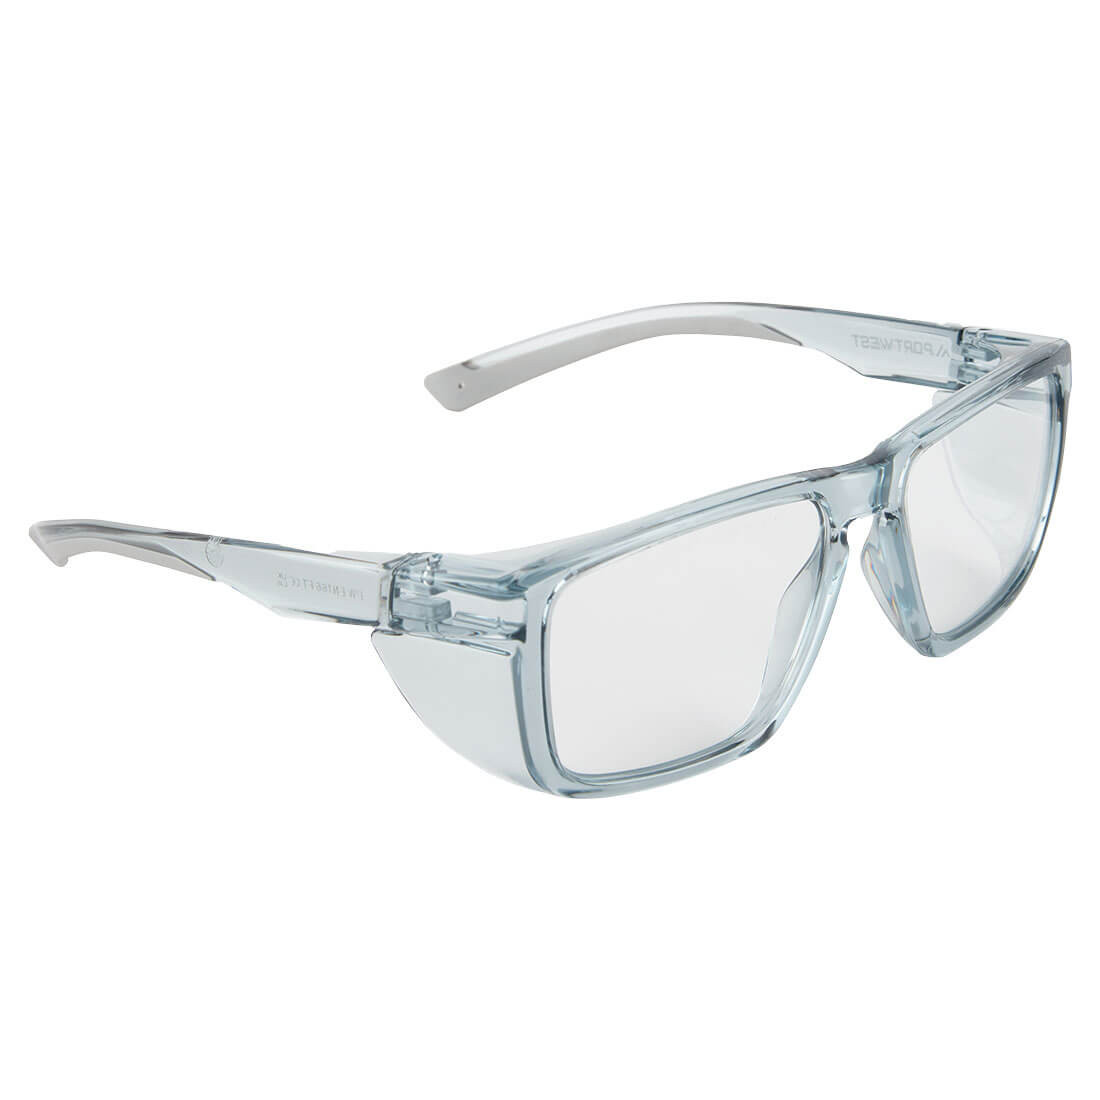 Ochelari de siguranta cu protectii laterale - Echipamente de protectie personala